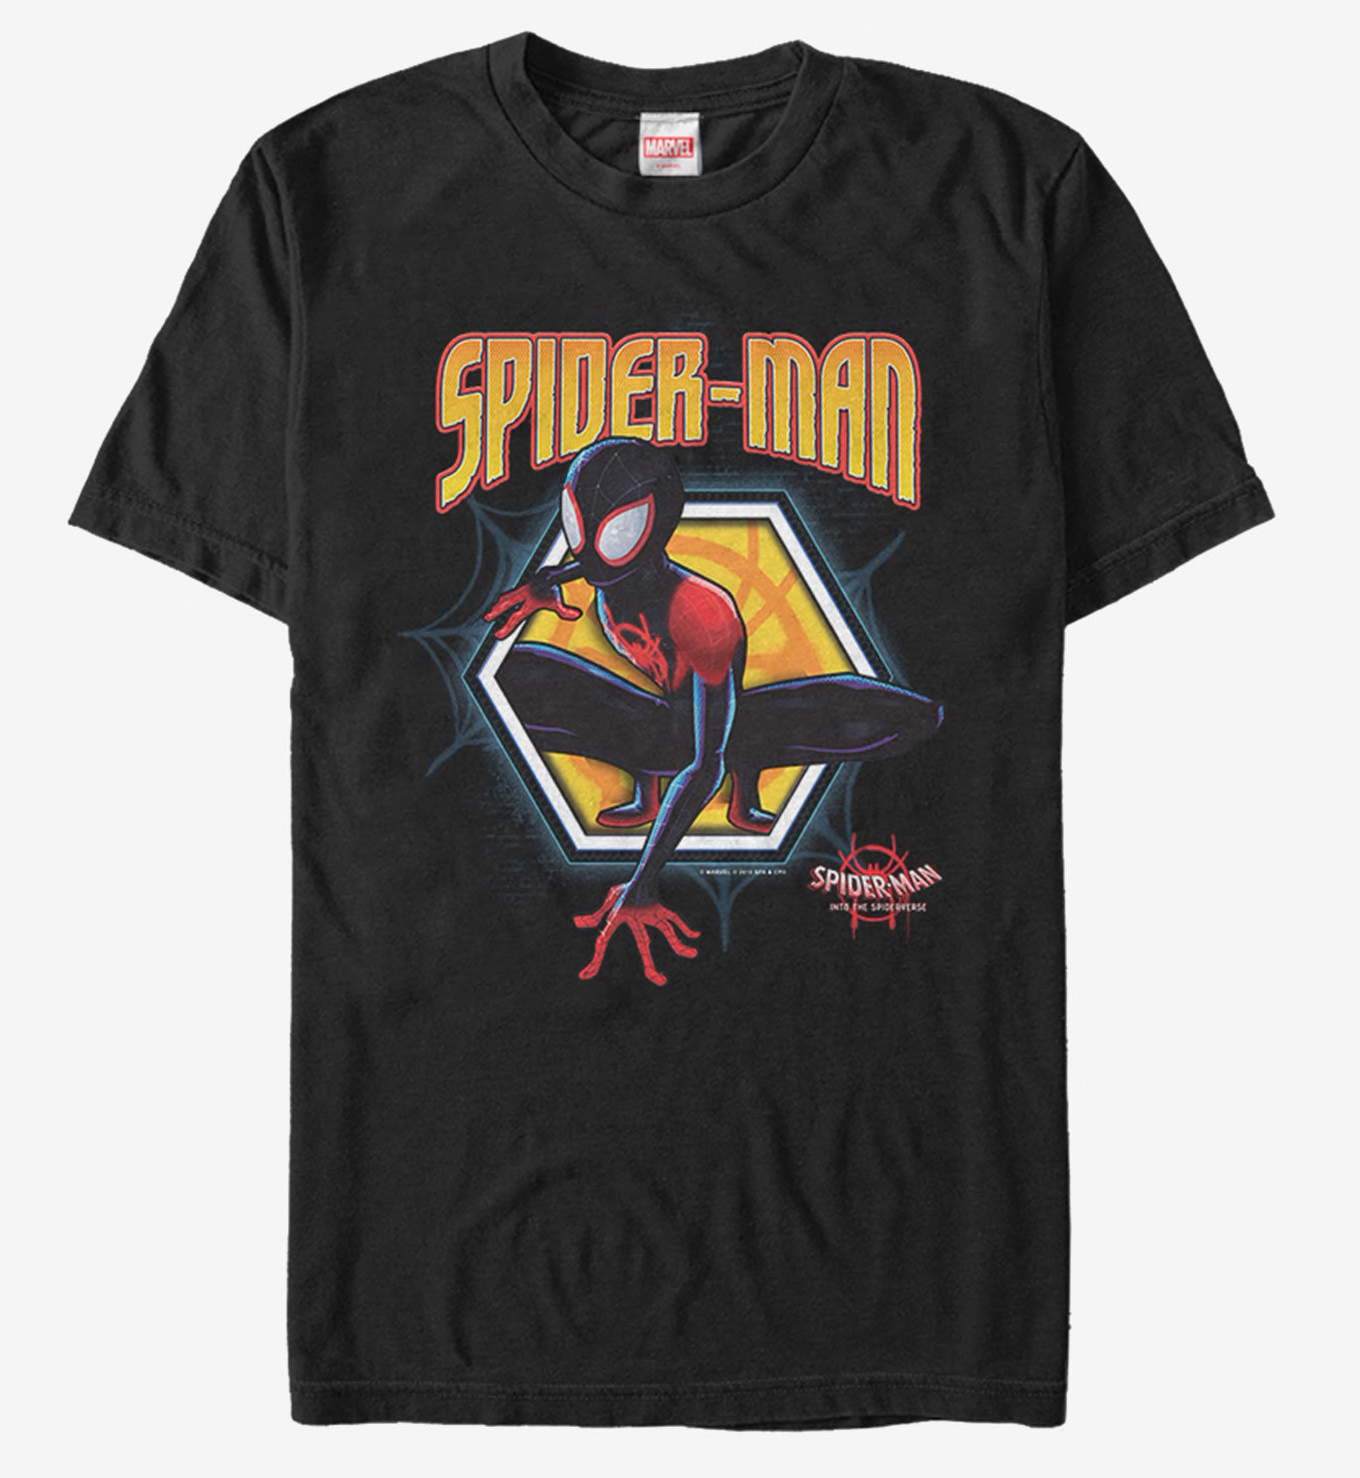 spiderman-spider-verse-shirt-match-jordan-1-origin-story-9